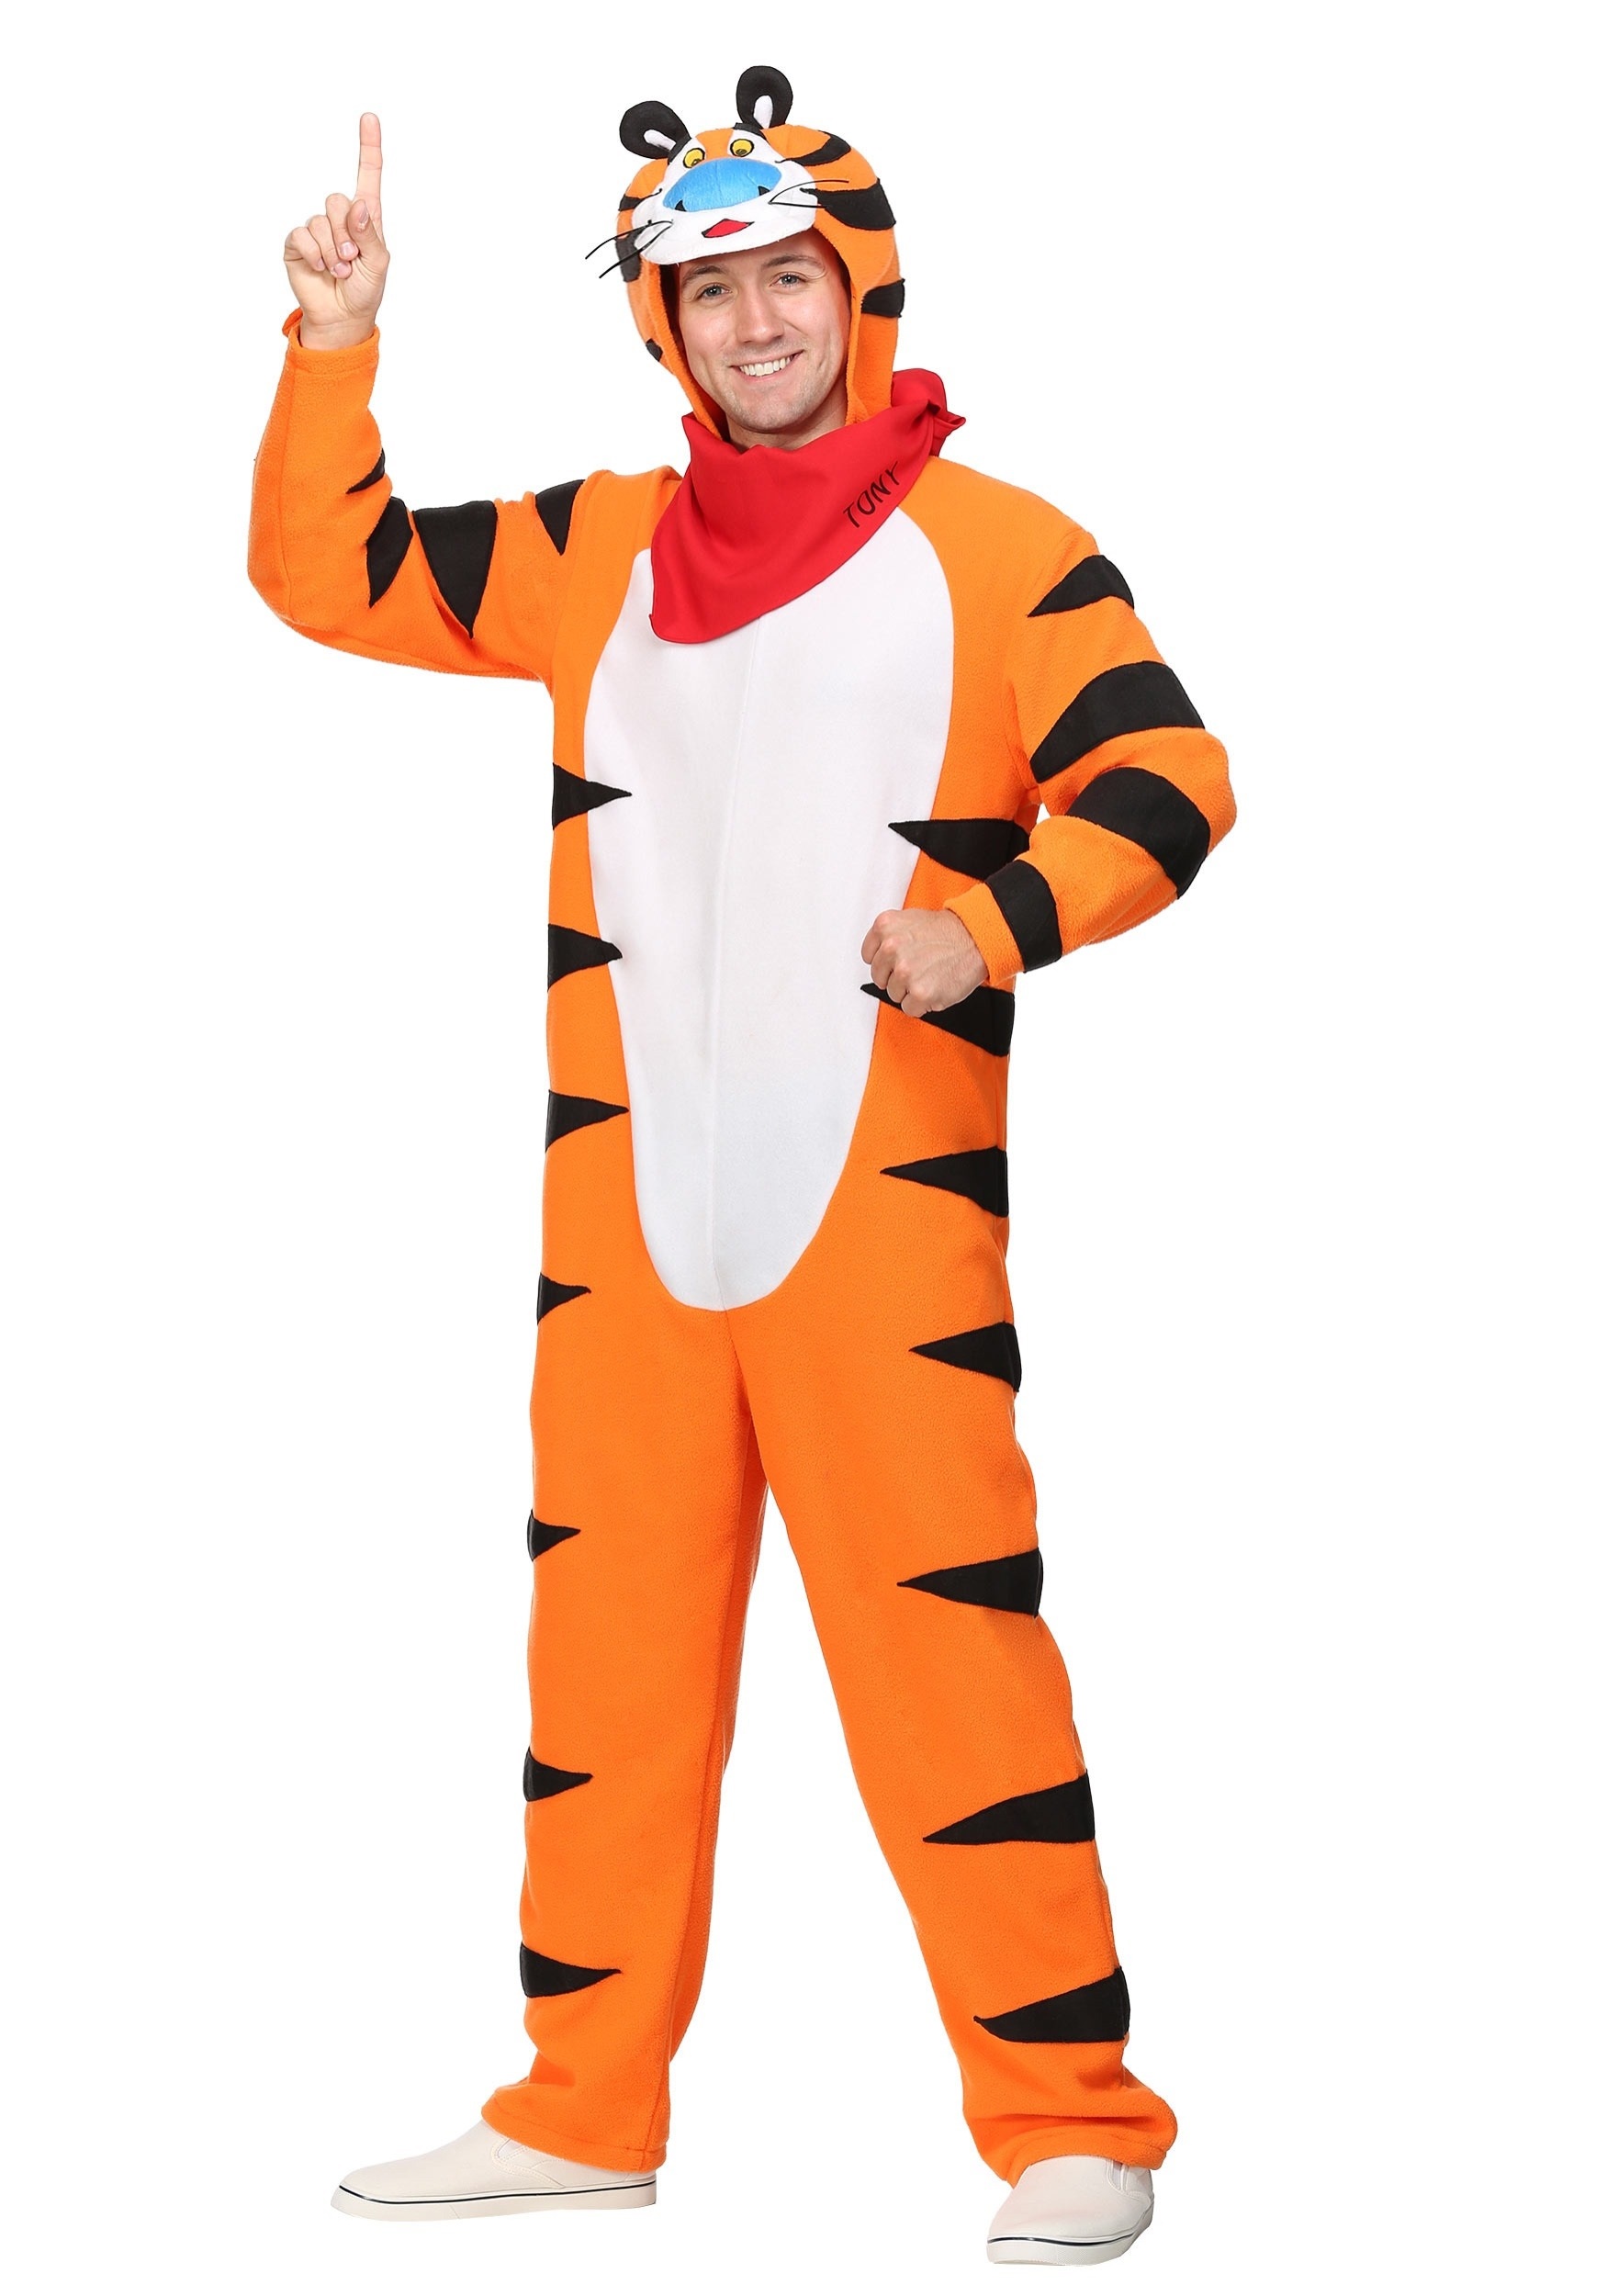 Tony the Tiger Costume